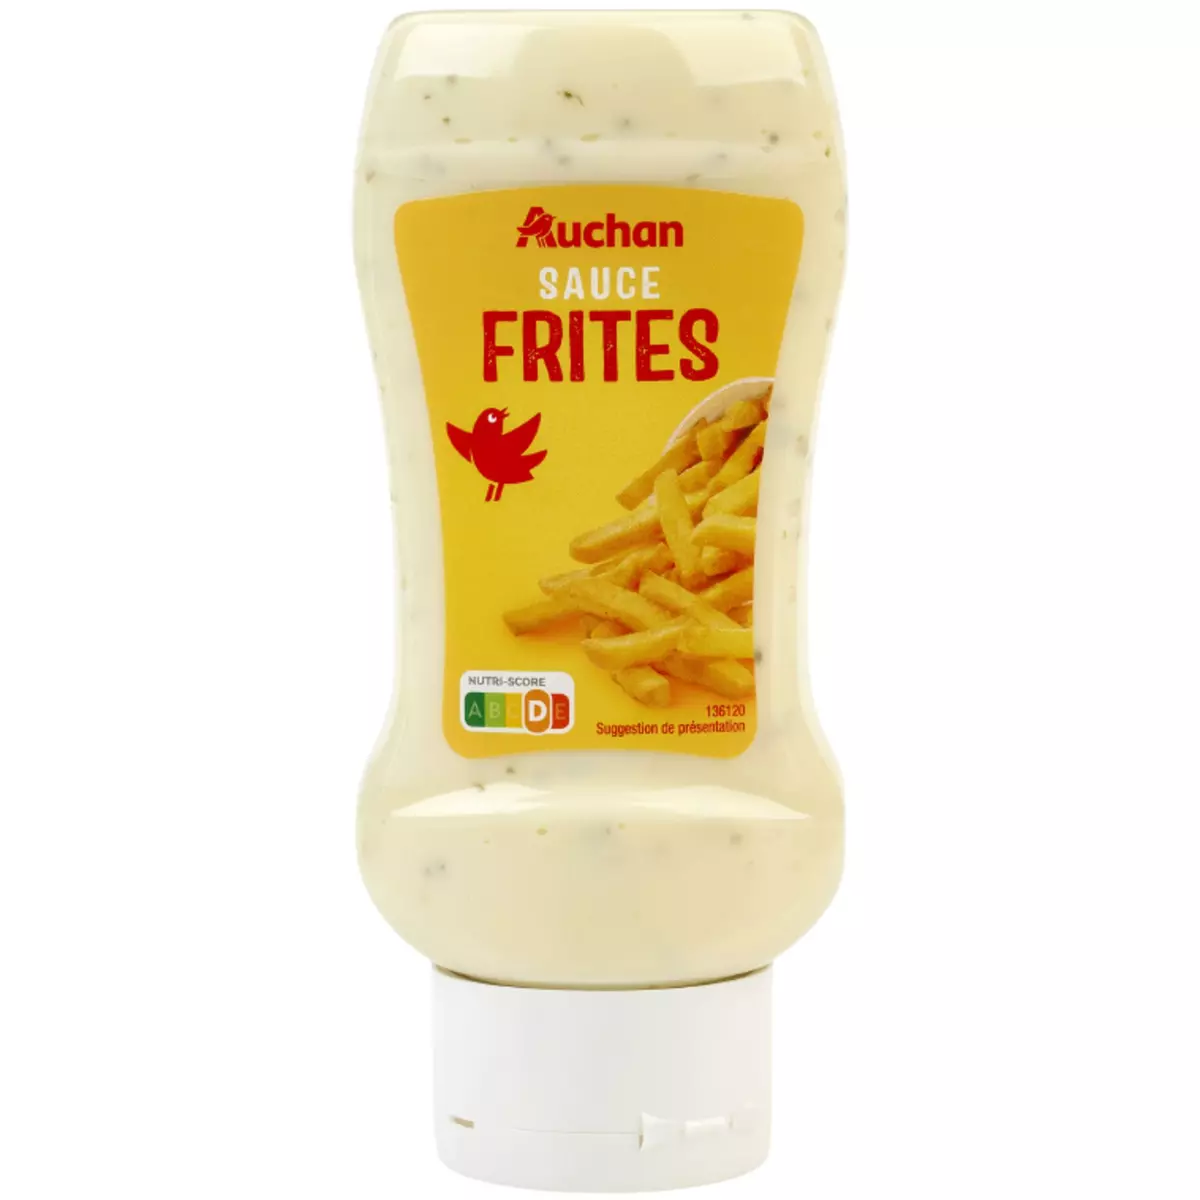 AUCHAN Sauce frites flacon souple 350g